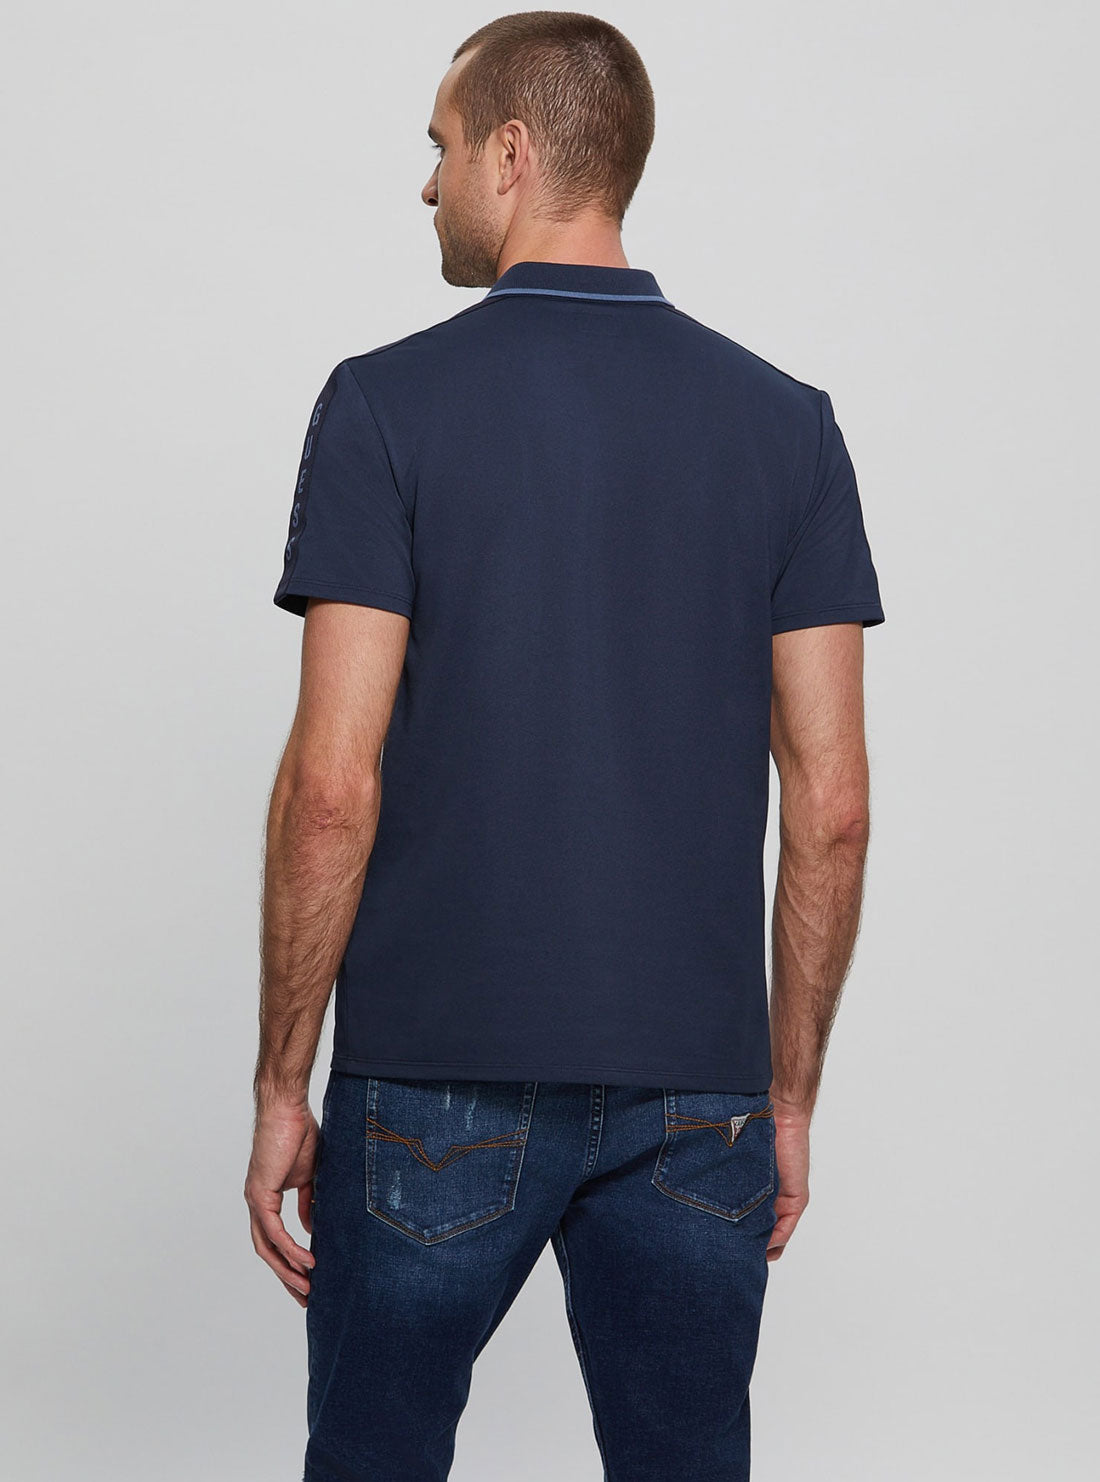 Navy Blue Paul Pique Tape Polo T-Shirt | GUESS Men's Apparel | back view